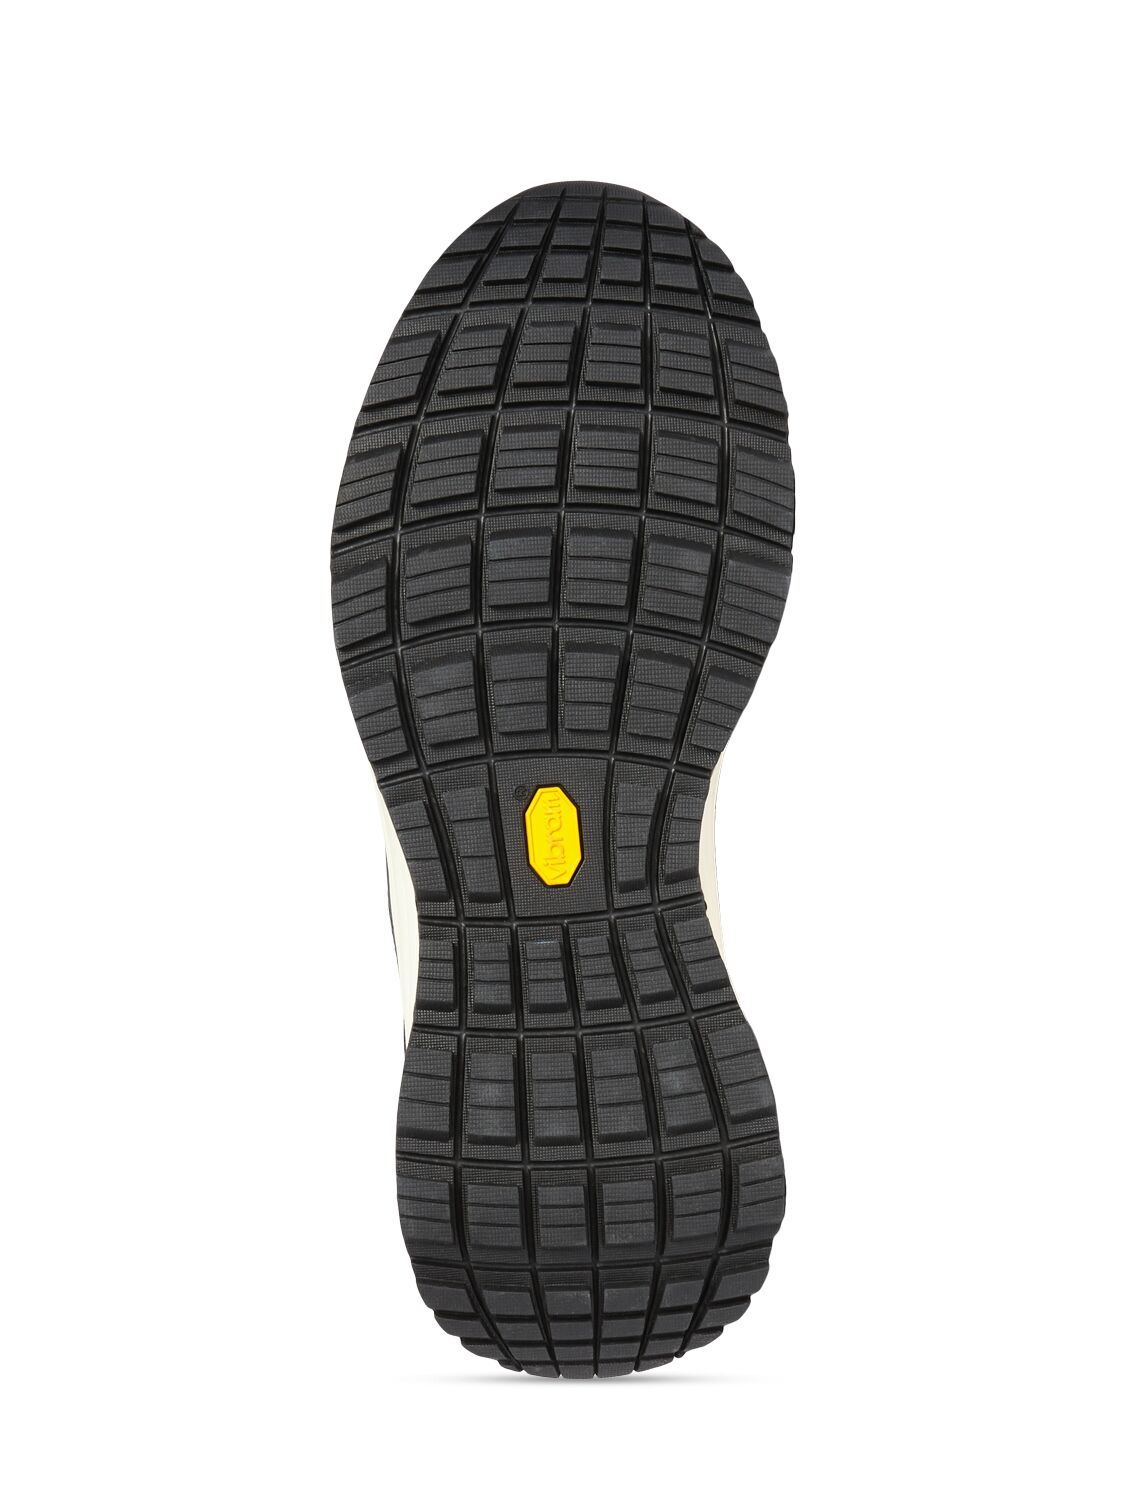 Shop Moncler 4cm Lite Runner Sneakers In Black